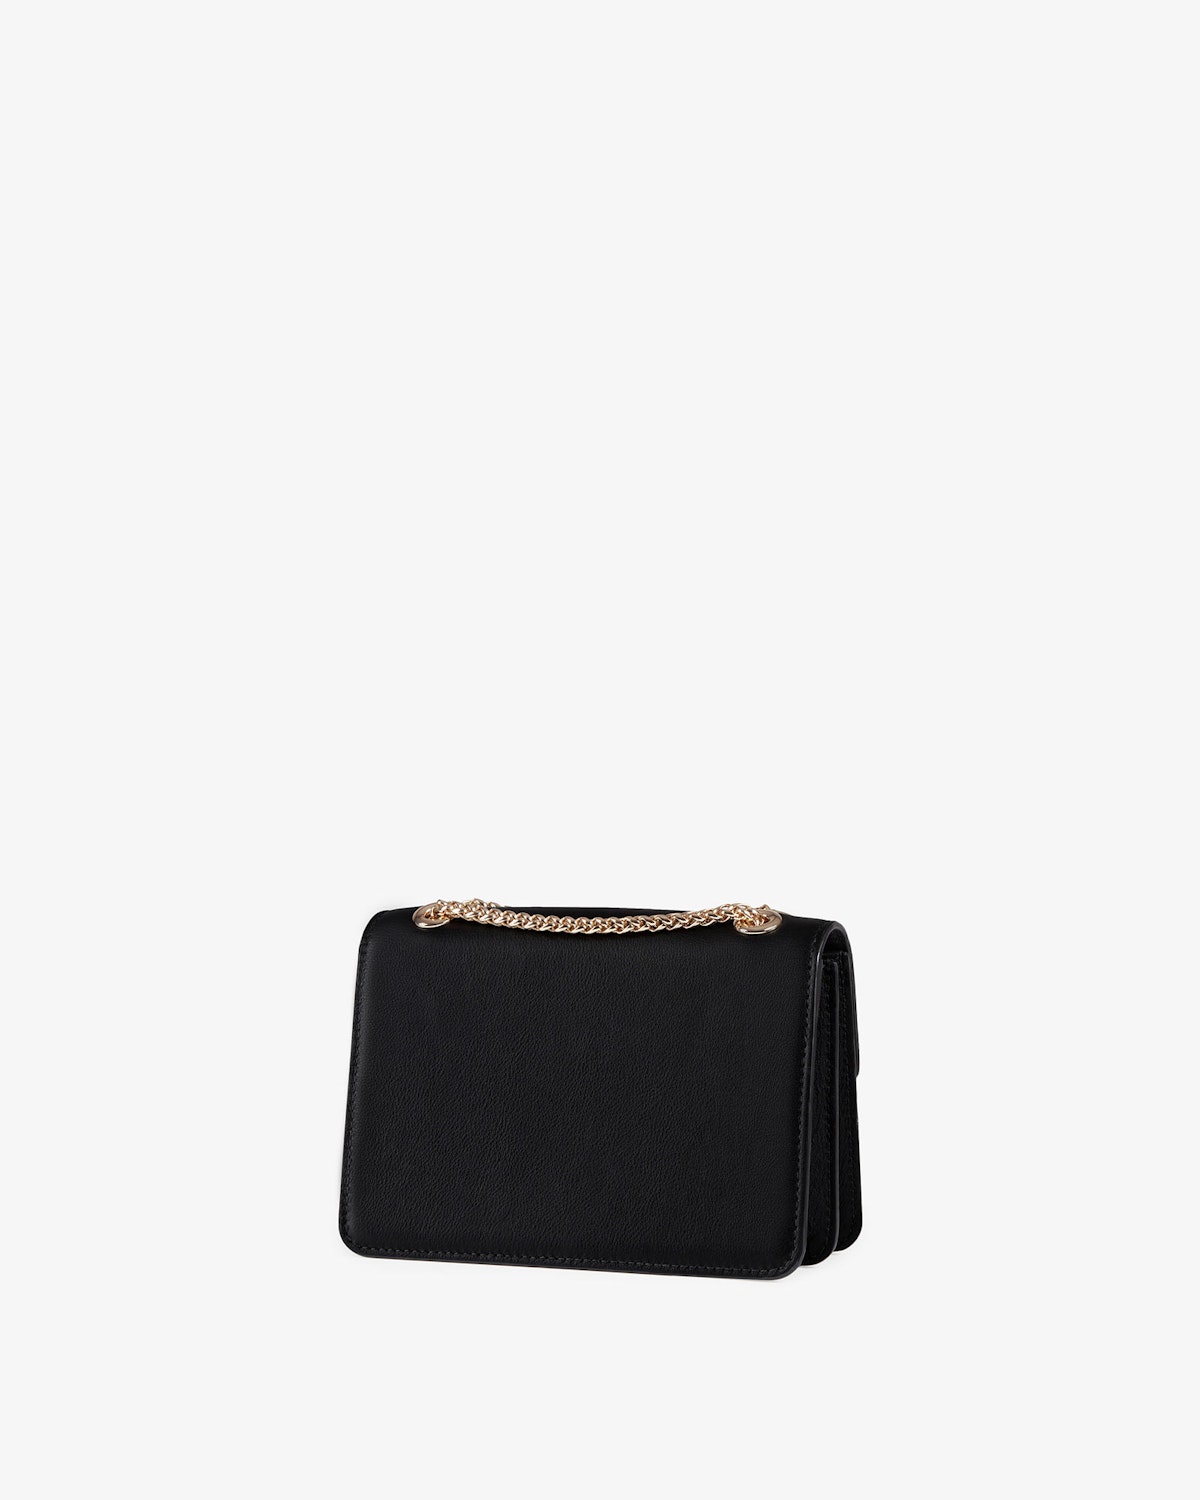 Strathberry - East/West Mini - Crossbody Leather Mini Handbag - Black ...